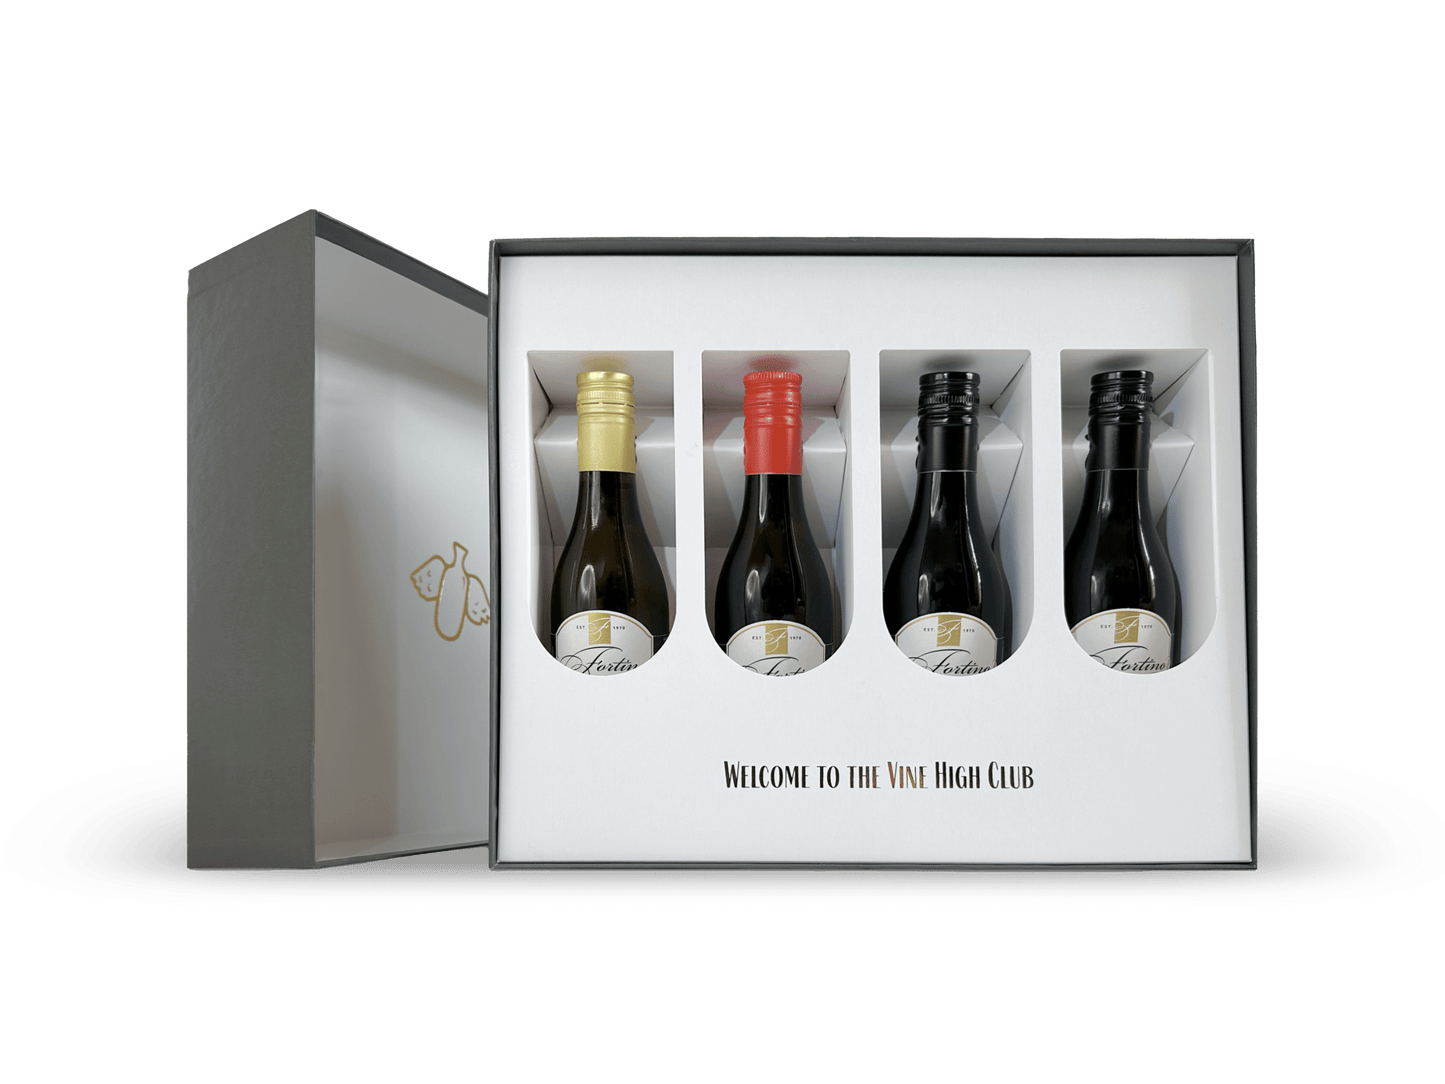 Wine tasting - one box